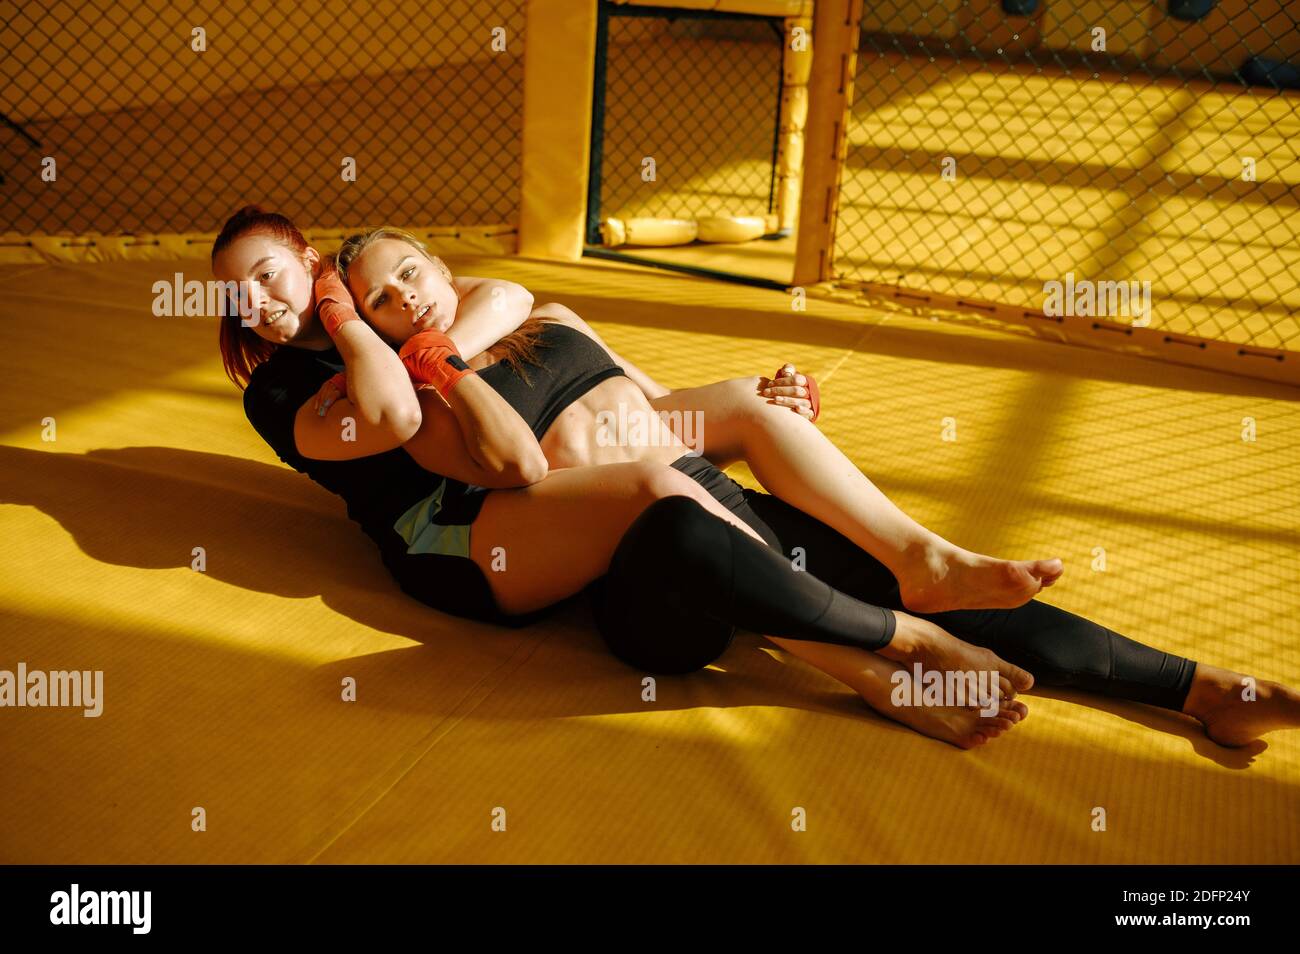 Woman makes choke hold in self-defense training Stock Photo - Alamy